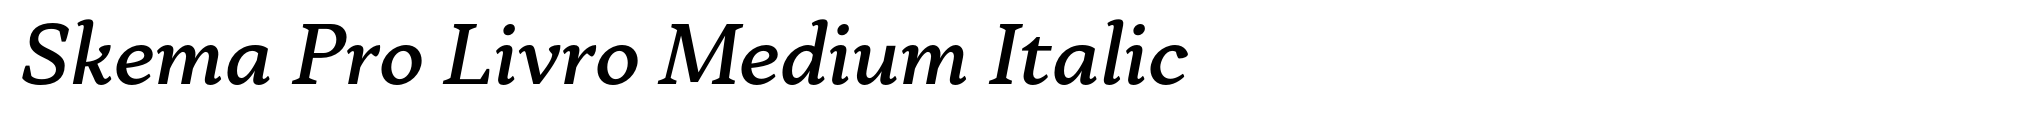 Skema Pro Livro Medium Italic image